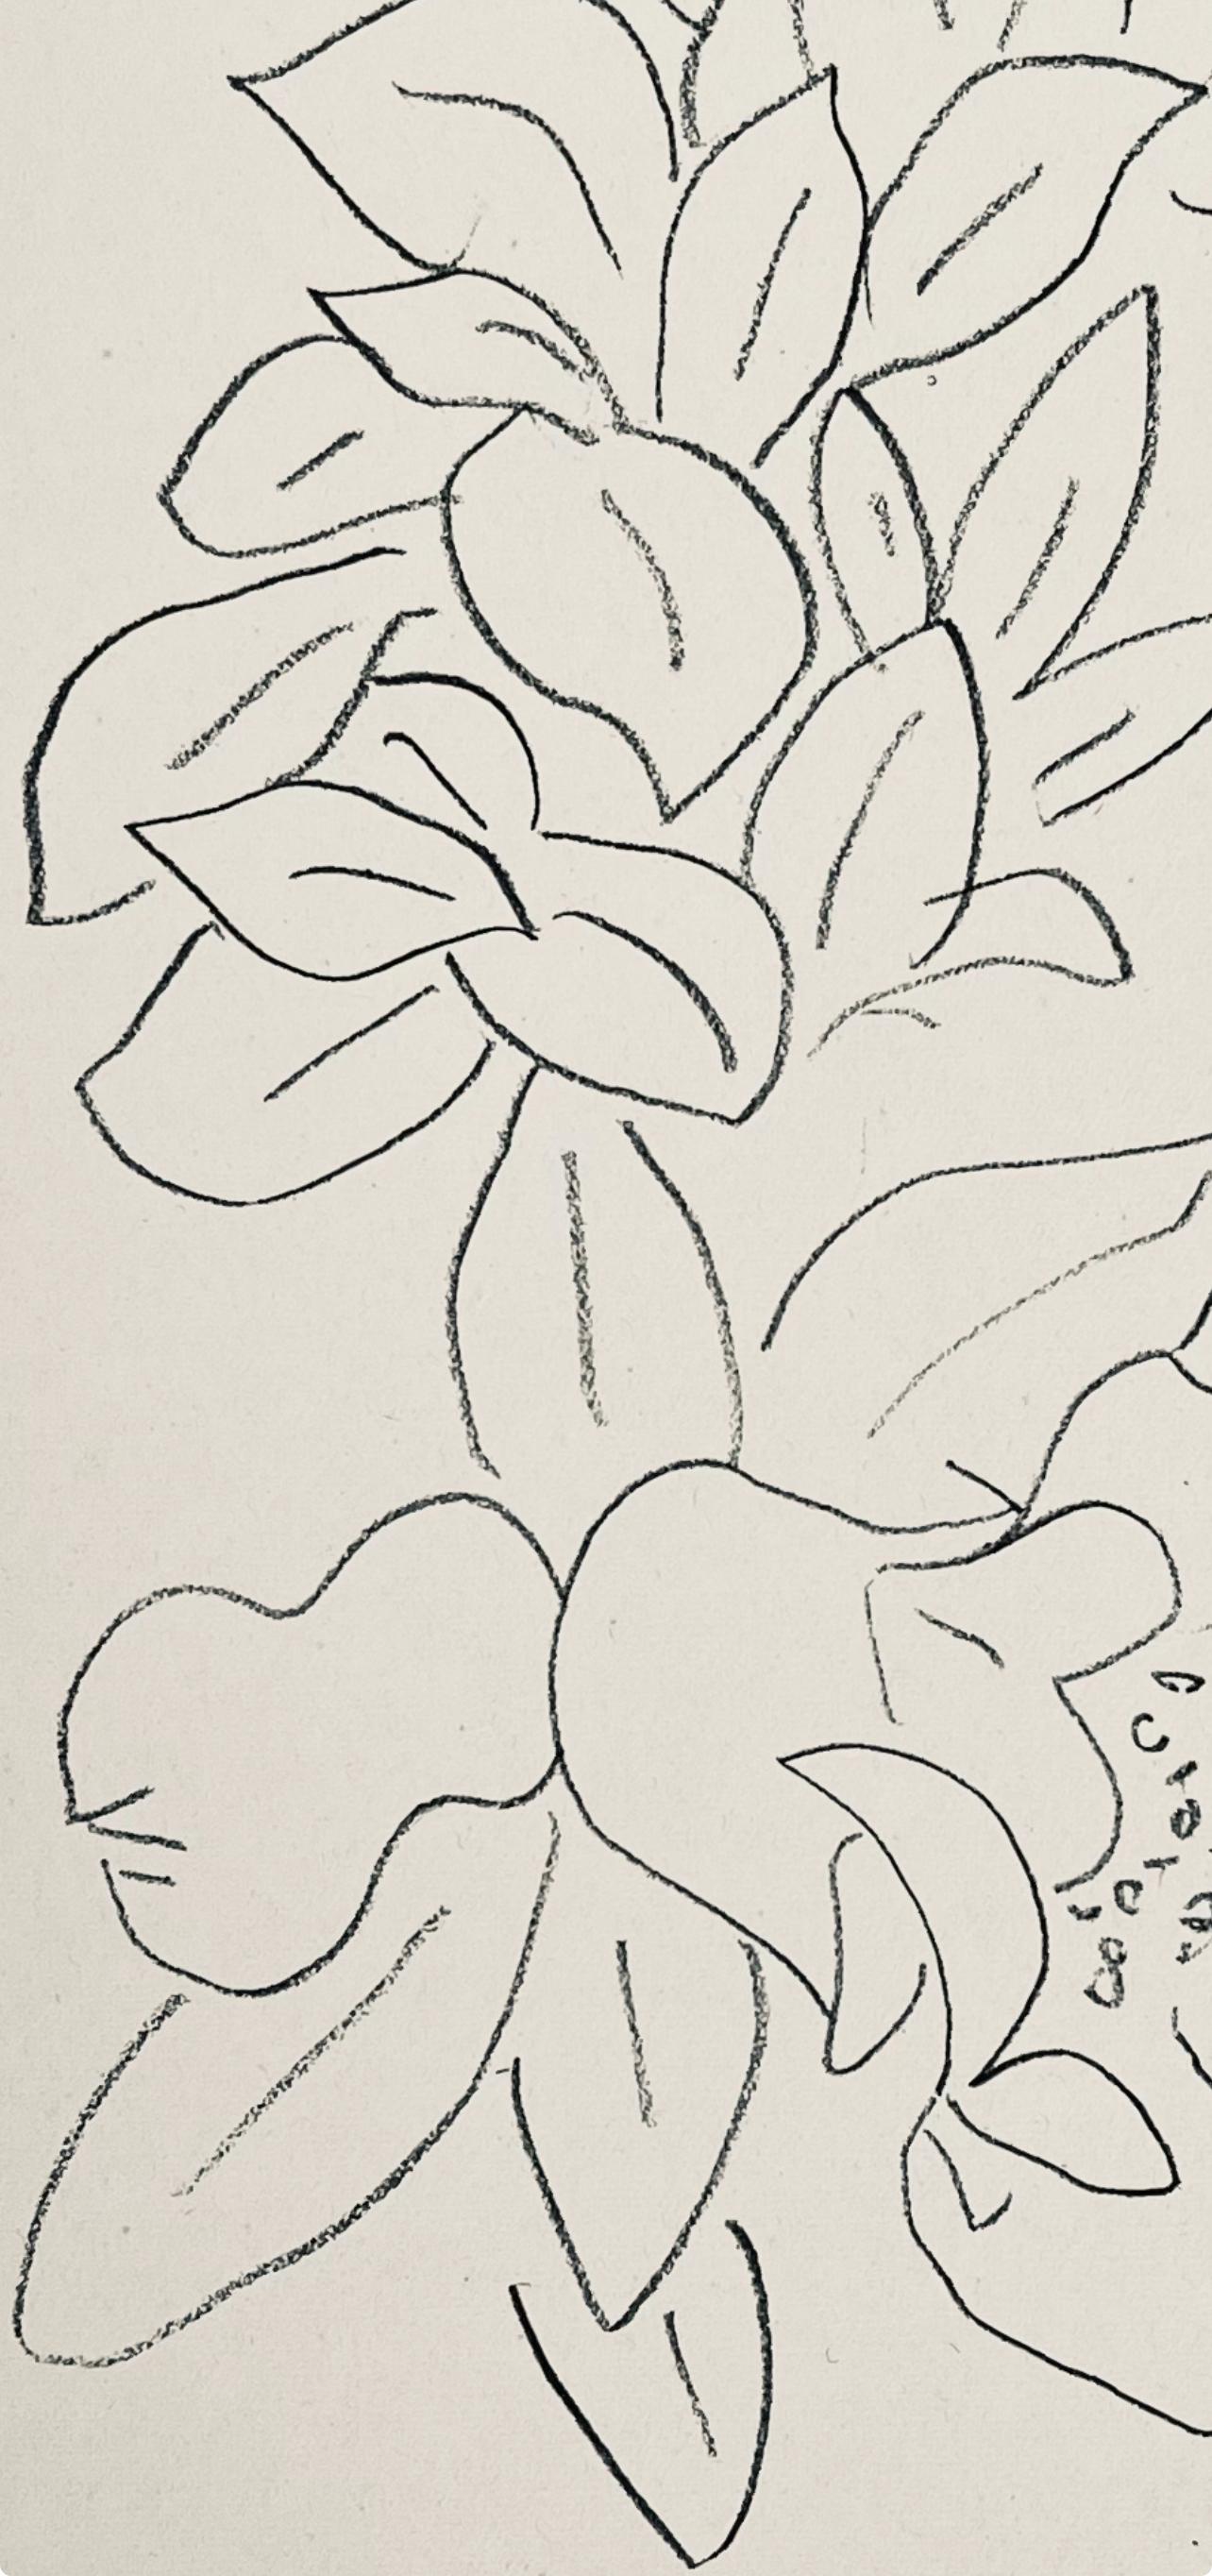 Lithograph on vélin du Marais paper. Inscription: Signed in the plate, as issued. Good condition. Notes: From the volume, Verve: Revue Artistique et Littéraire, Vol. IV, N° 13, November 1945. Printed by Draeger Frerés, Paris, November 8, 1945.